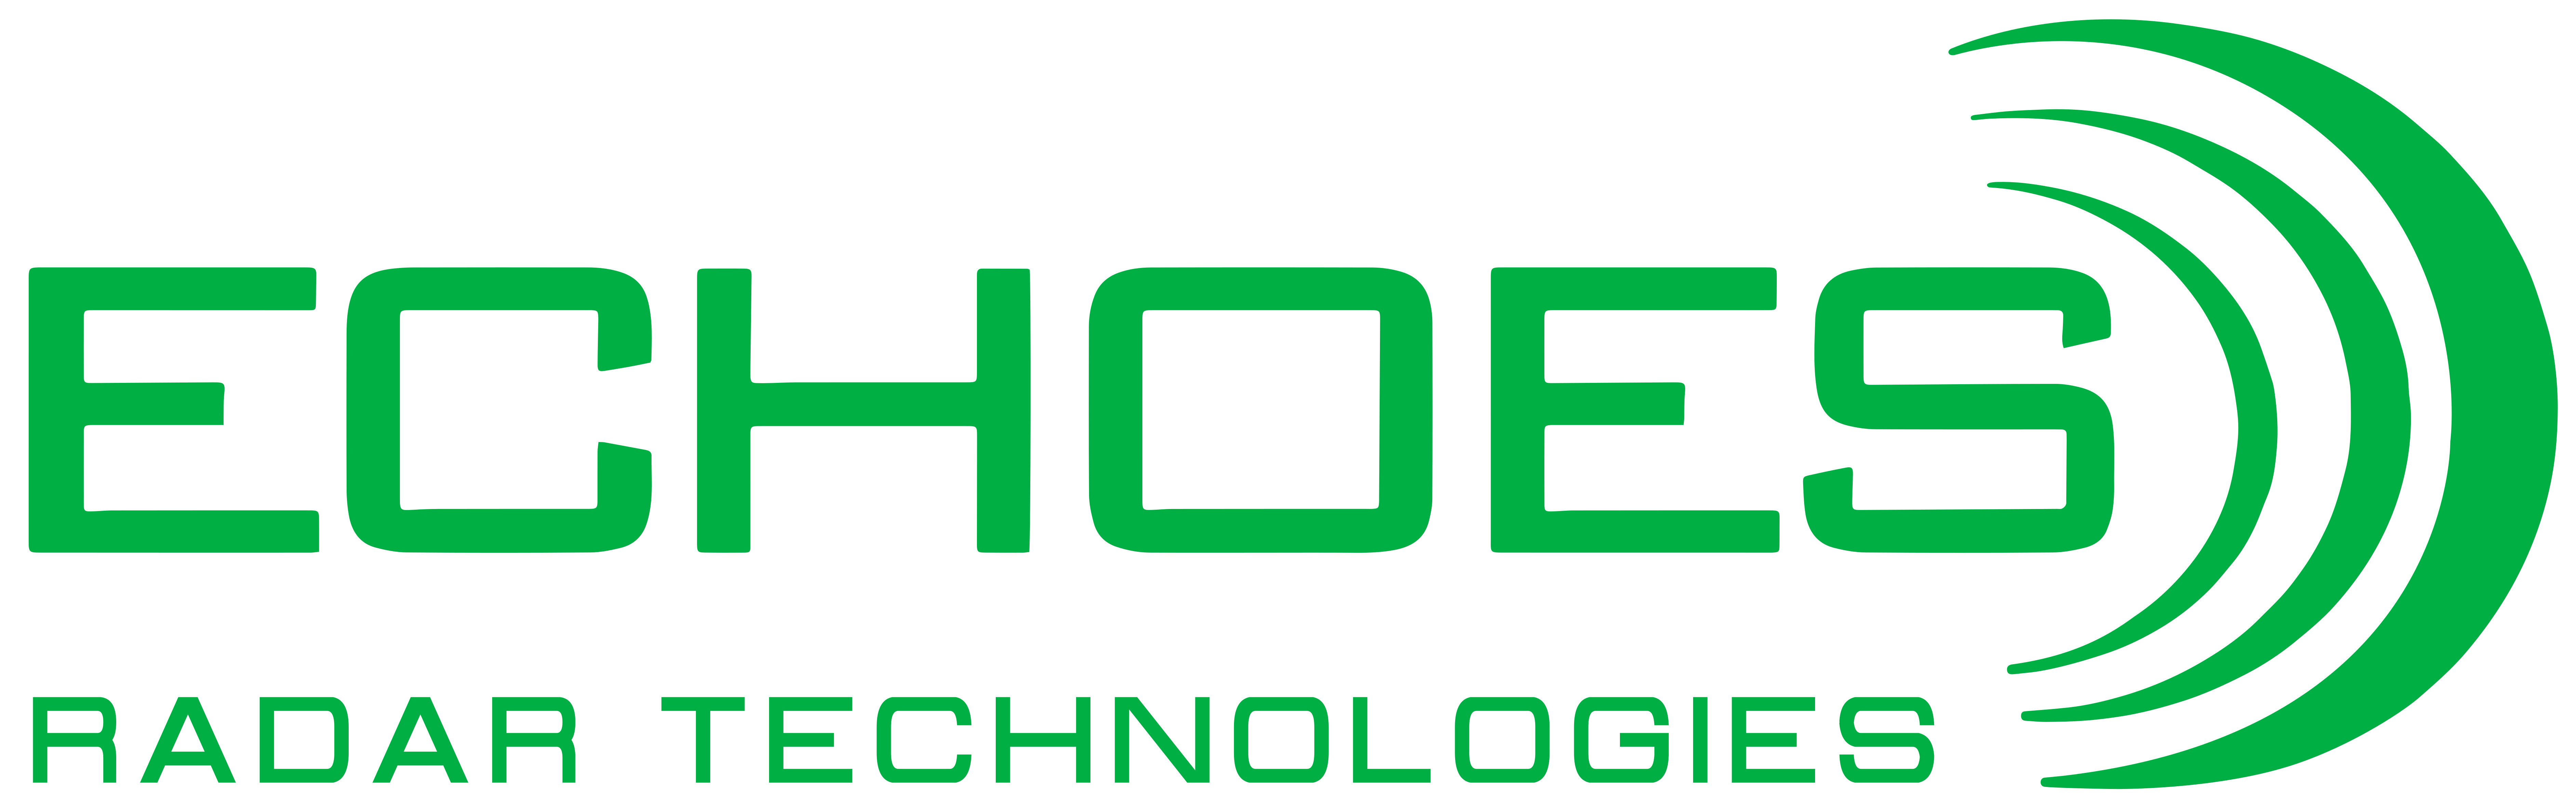 ECHOES Logo